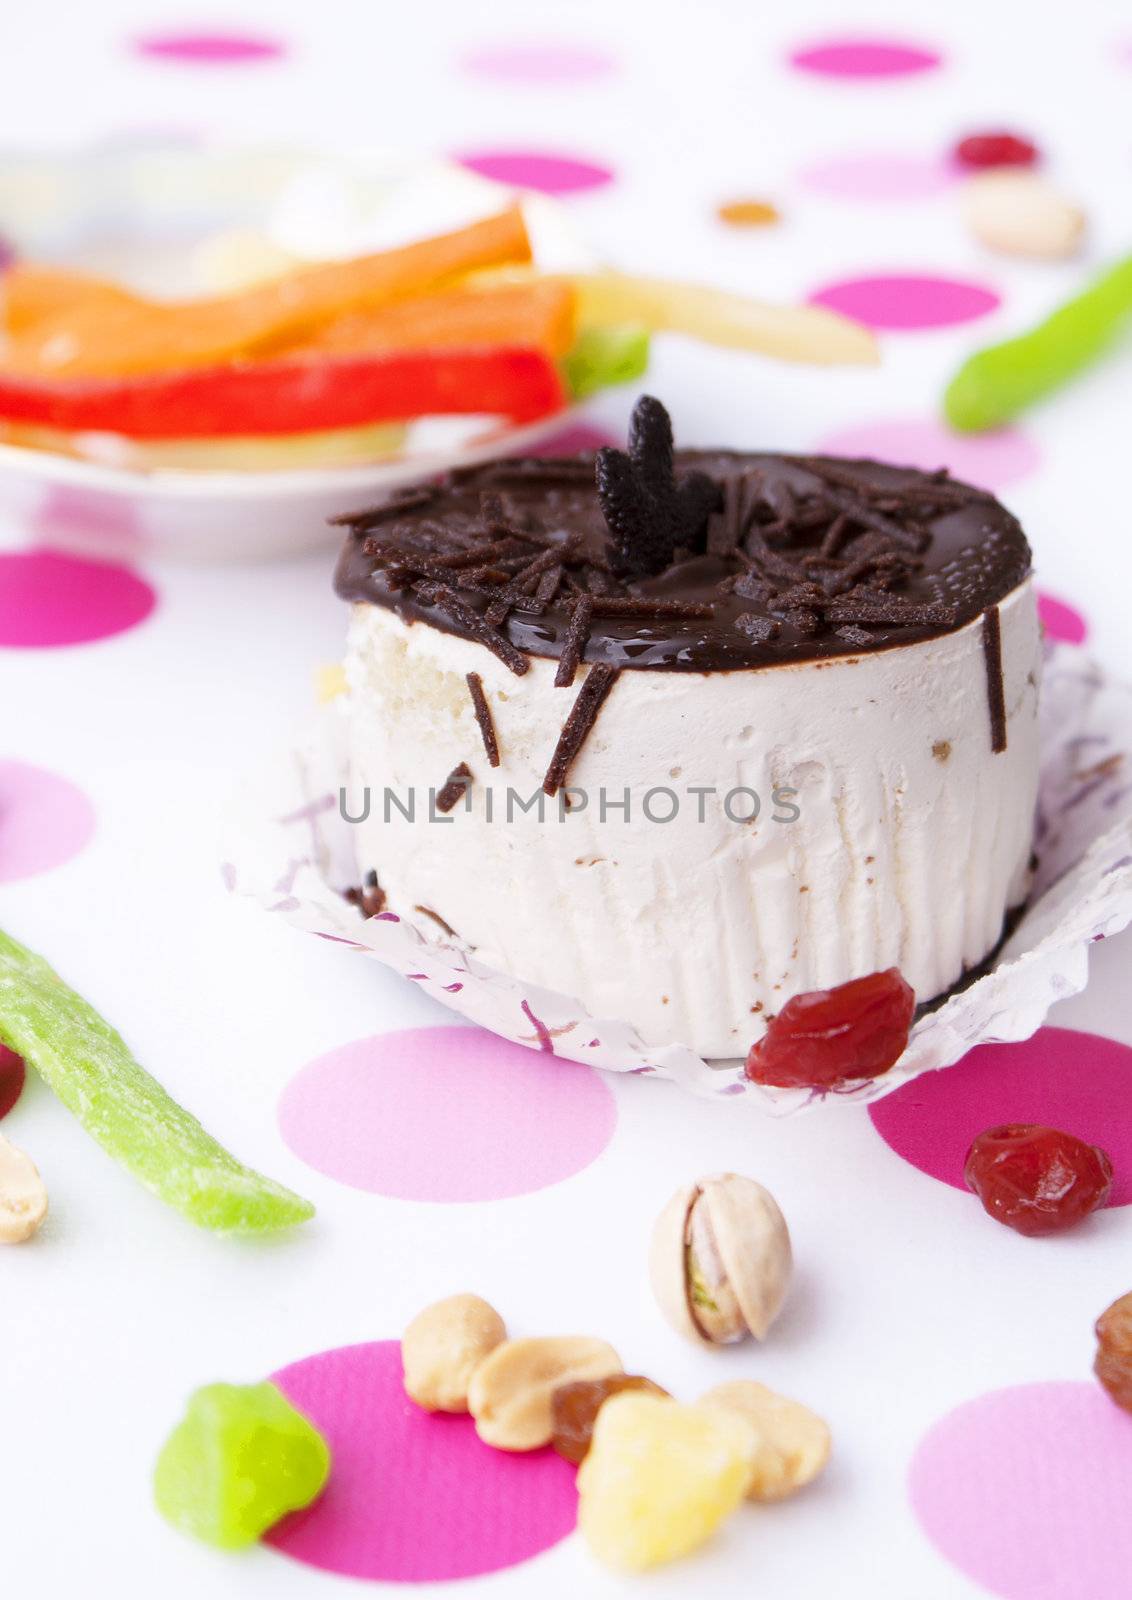 The fresh fruitcake and sweet by sergey150770SV